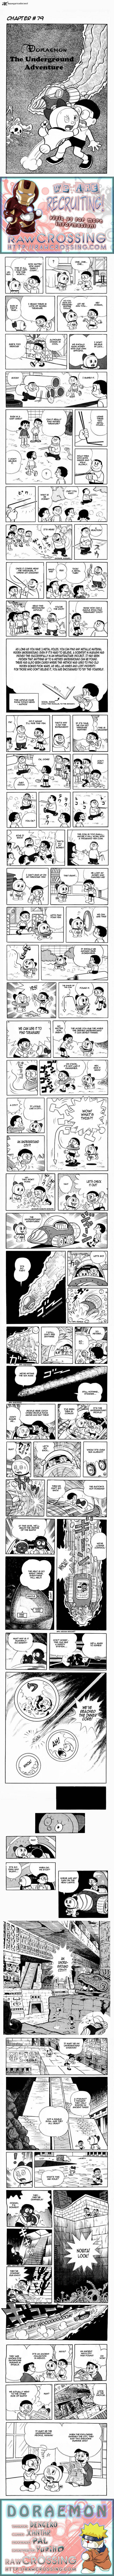 Doraemon Chapter 79 Page 1